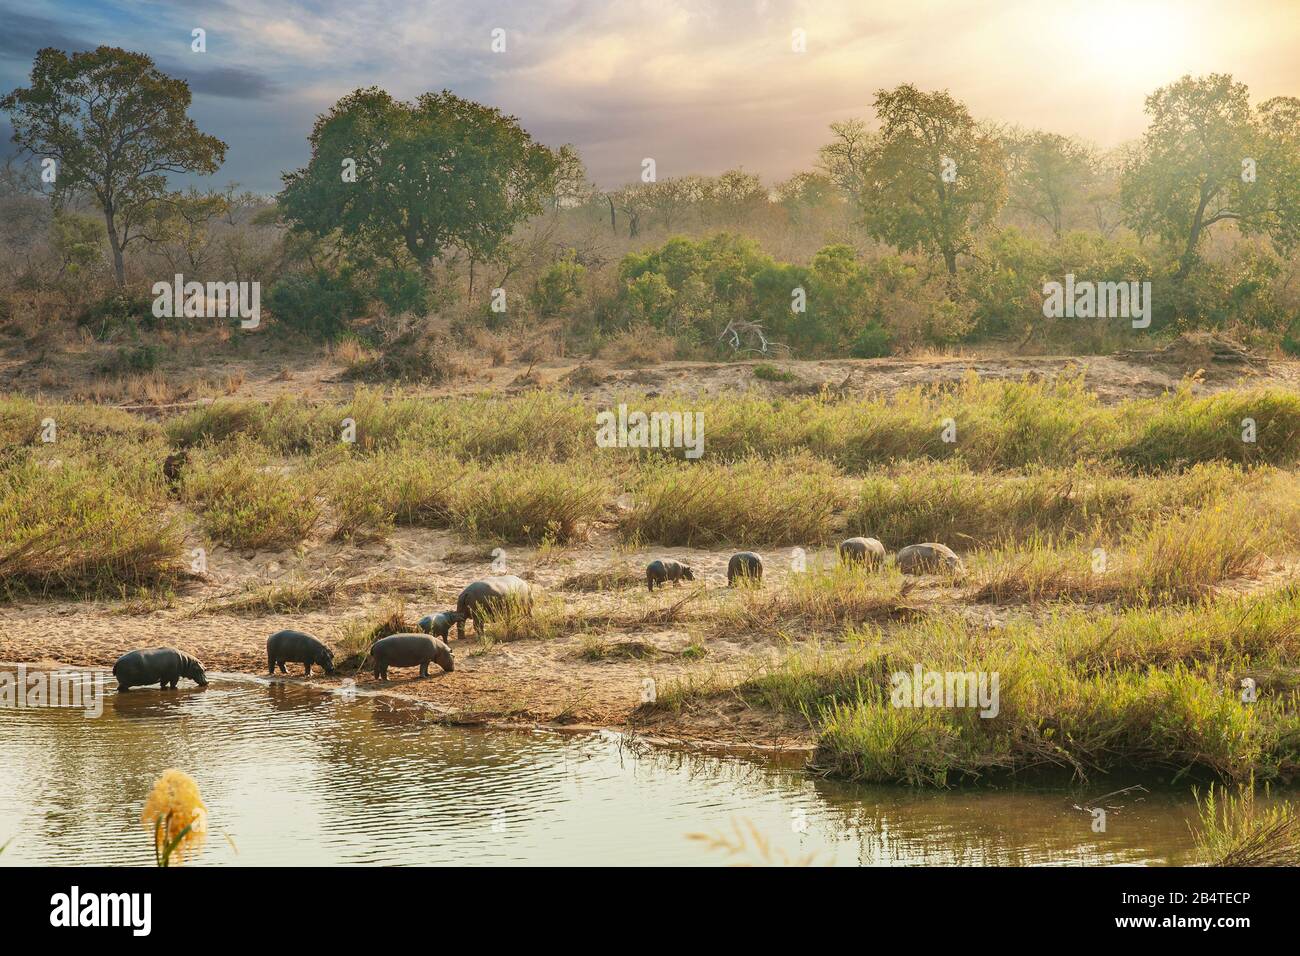 Mandria di ippopotami nel fiume sabie, Sud Africa Foto Stock